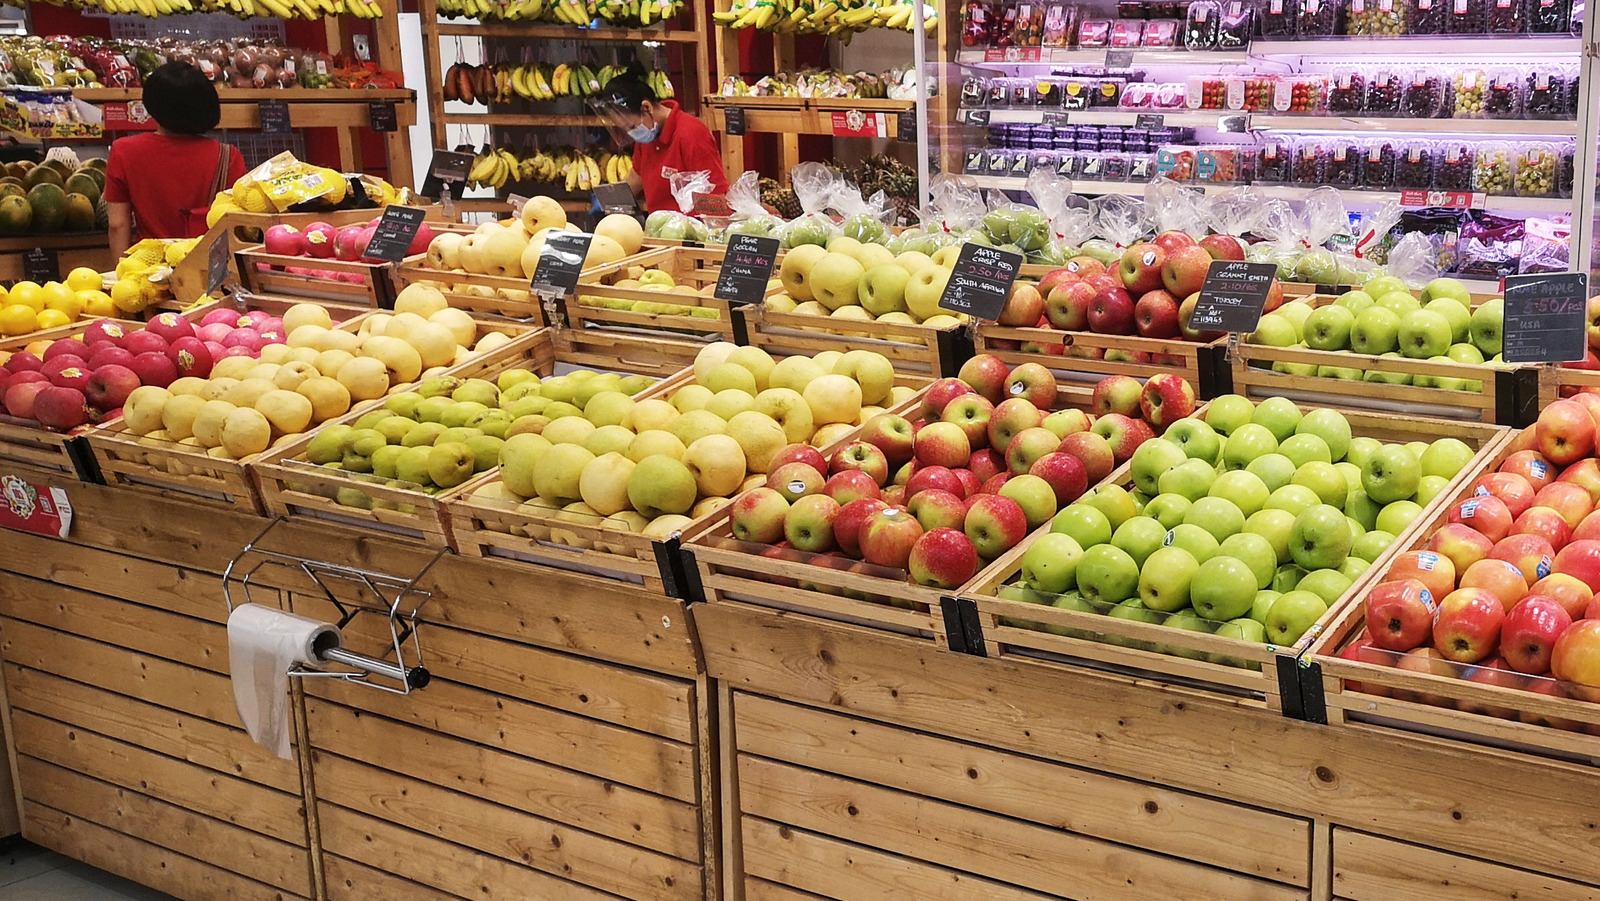 Apples, Neighborhood Grocery Store & Pharmacy